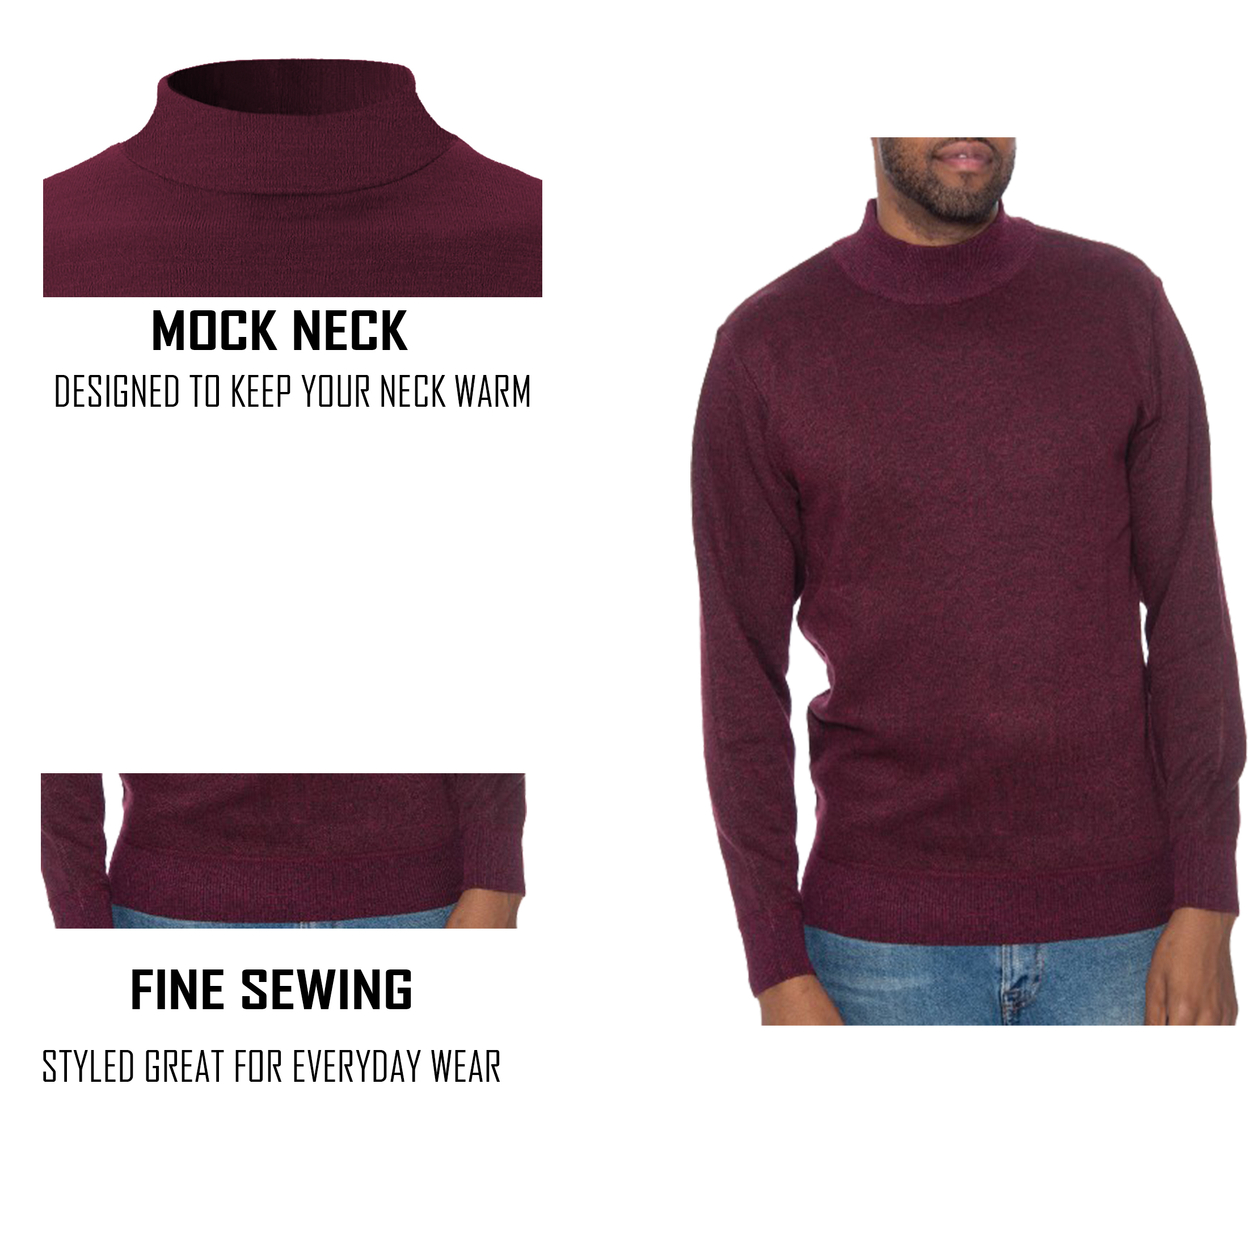 2-Pack: Men's Winter Warm Cozy Knit Slim Fit Mock Neck Sweater - Black & Black, Xx-large